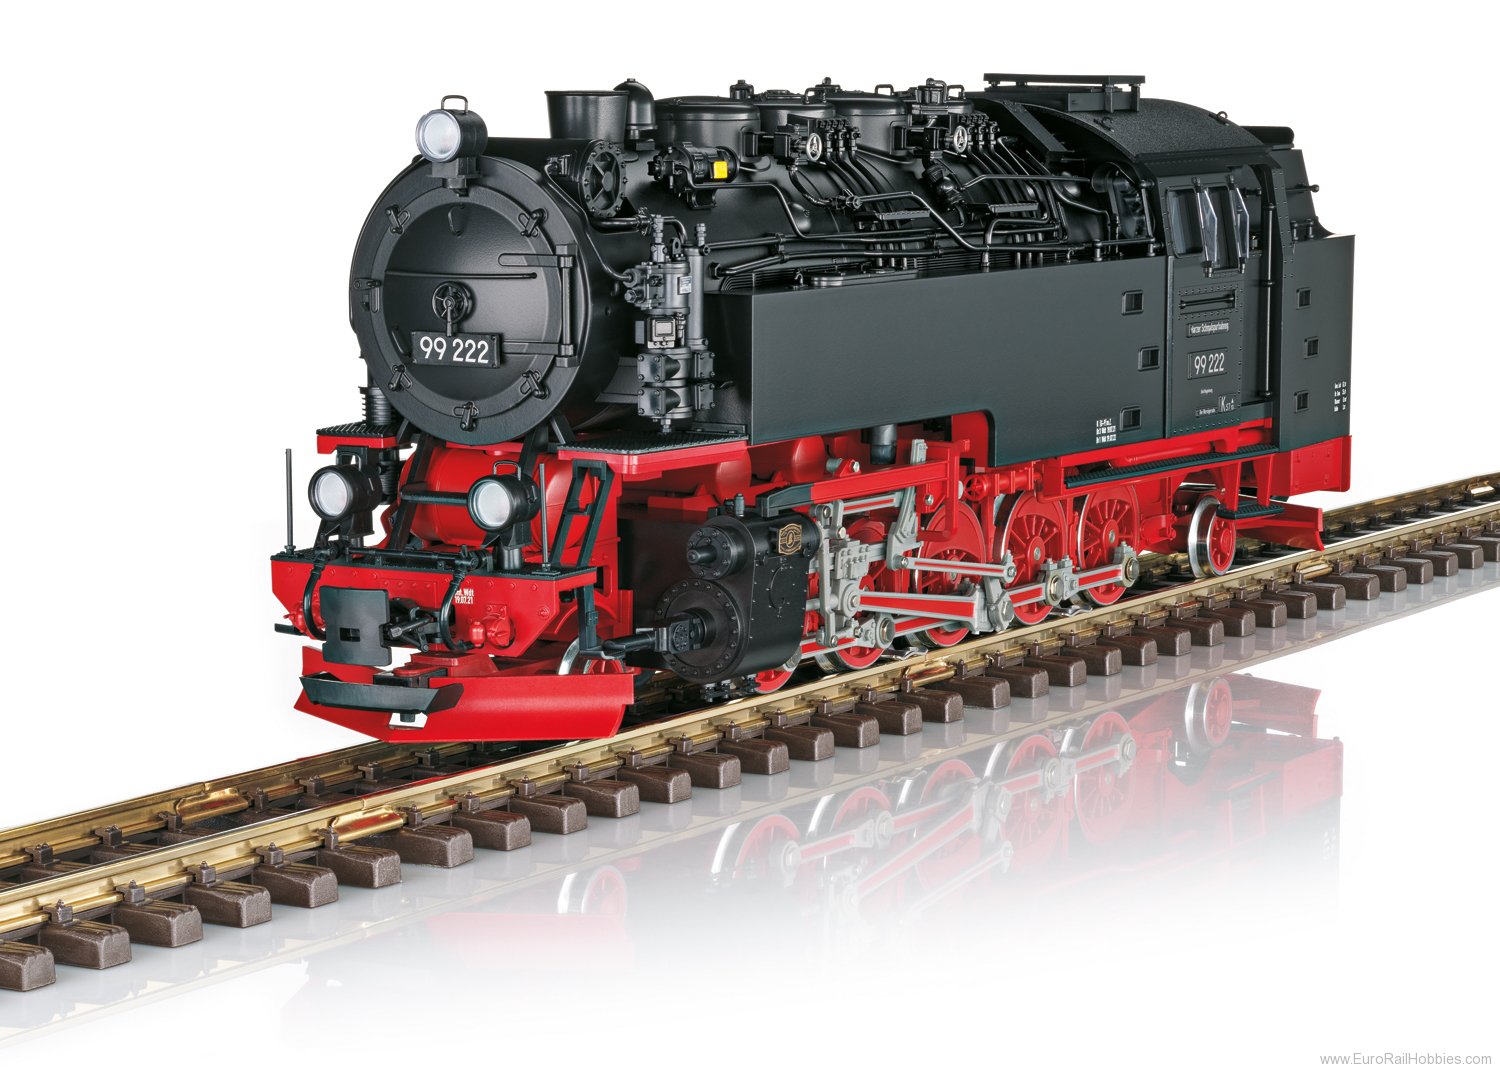 LGB 26819 DRG HSB Steam locomotive class 99.22 125 Year